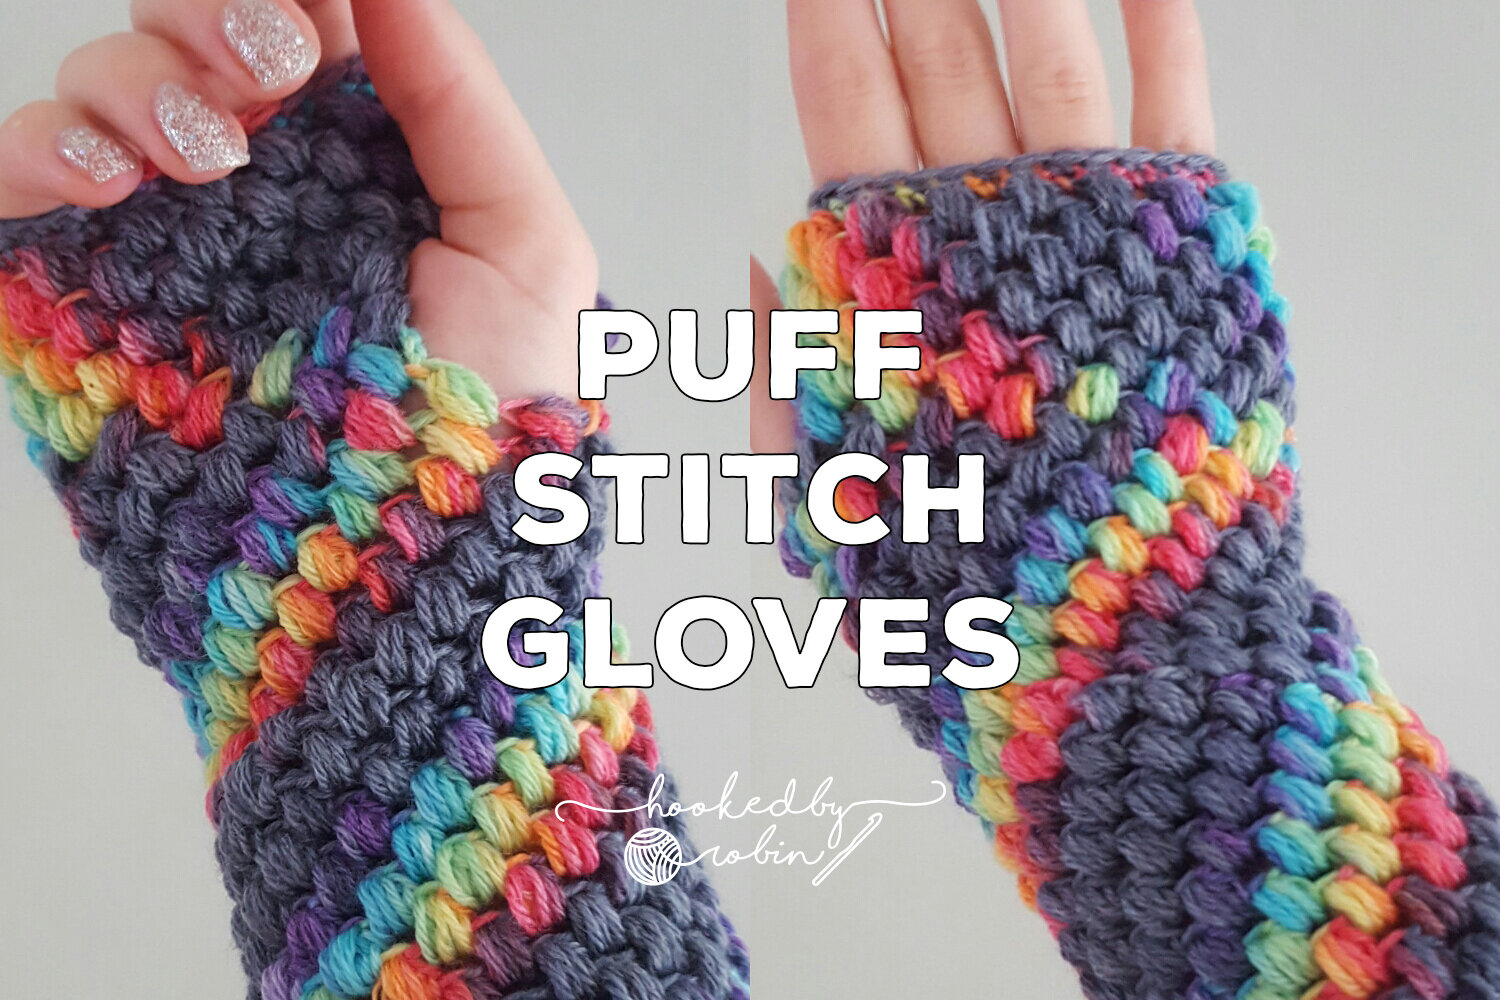 Crochet Fingerless Gloves with Shell Stitch / Beginner Friendly Tutorials 